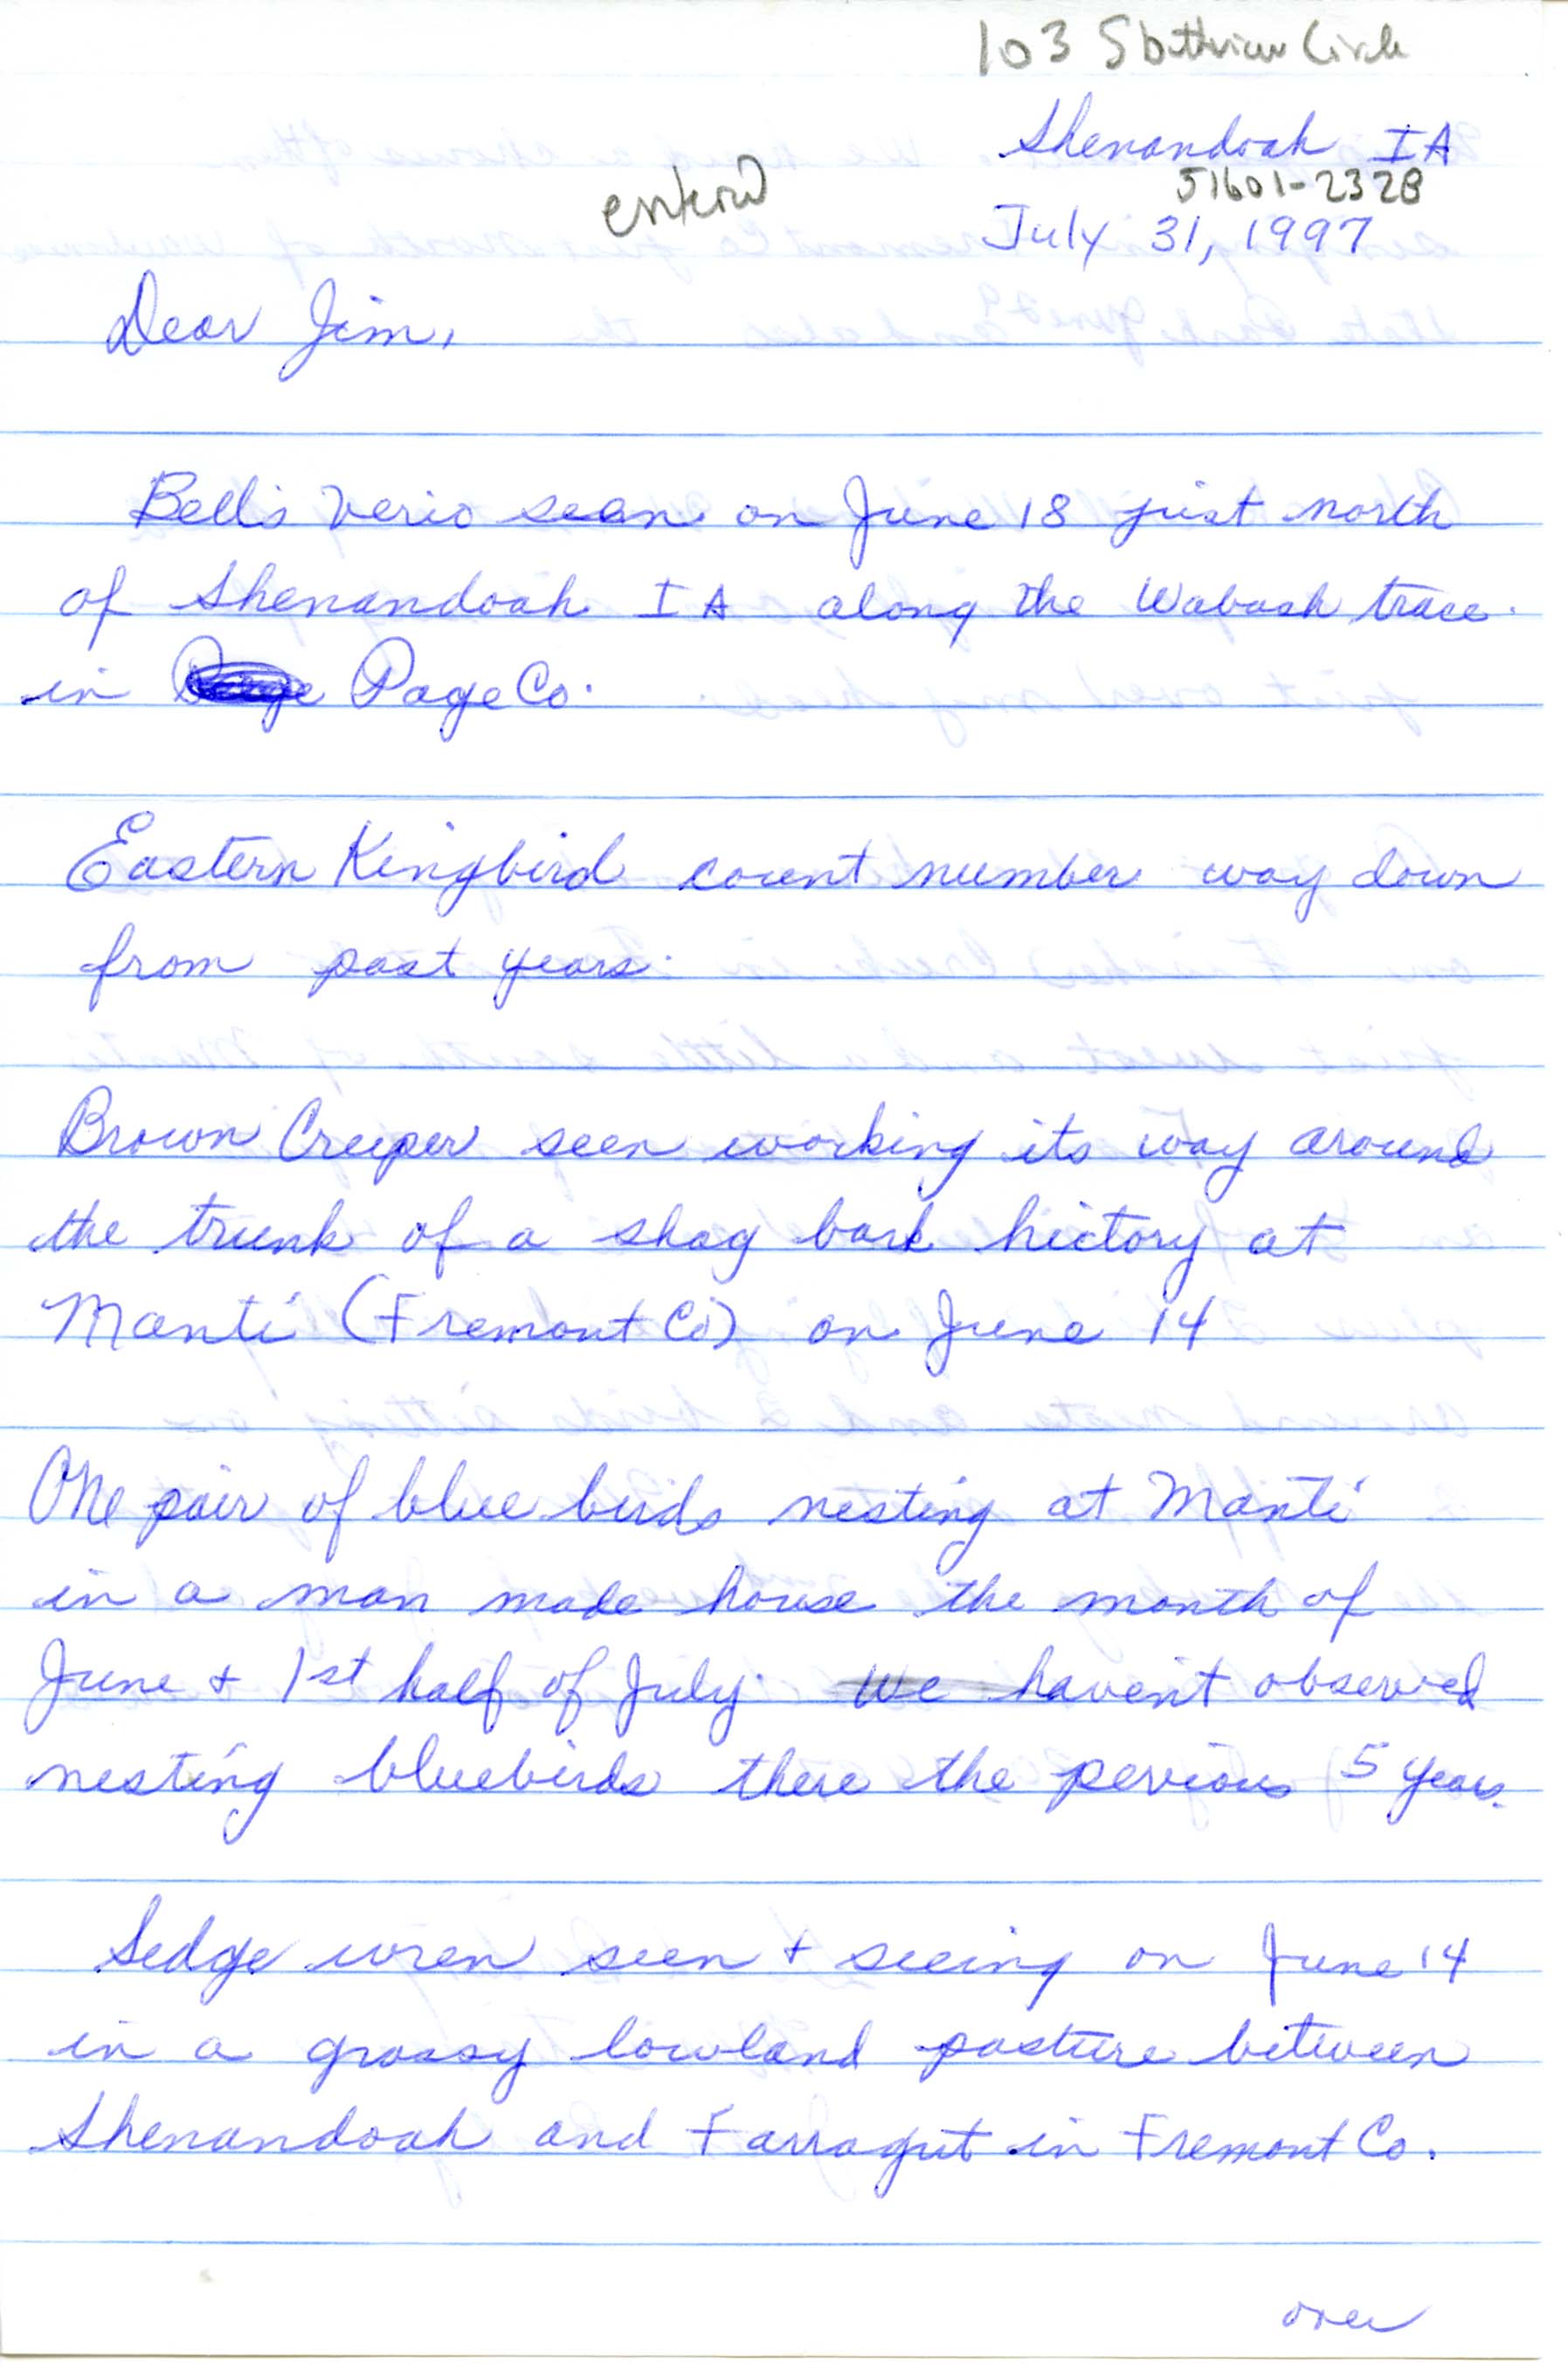 Marie E. Spears Tiemann and Jean B. Braley letter to James J. Dinsmore regarding summer bird sightings, July 31, 1997